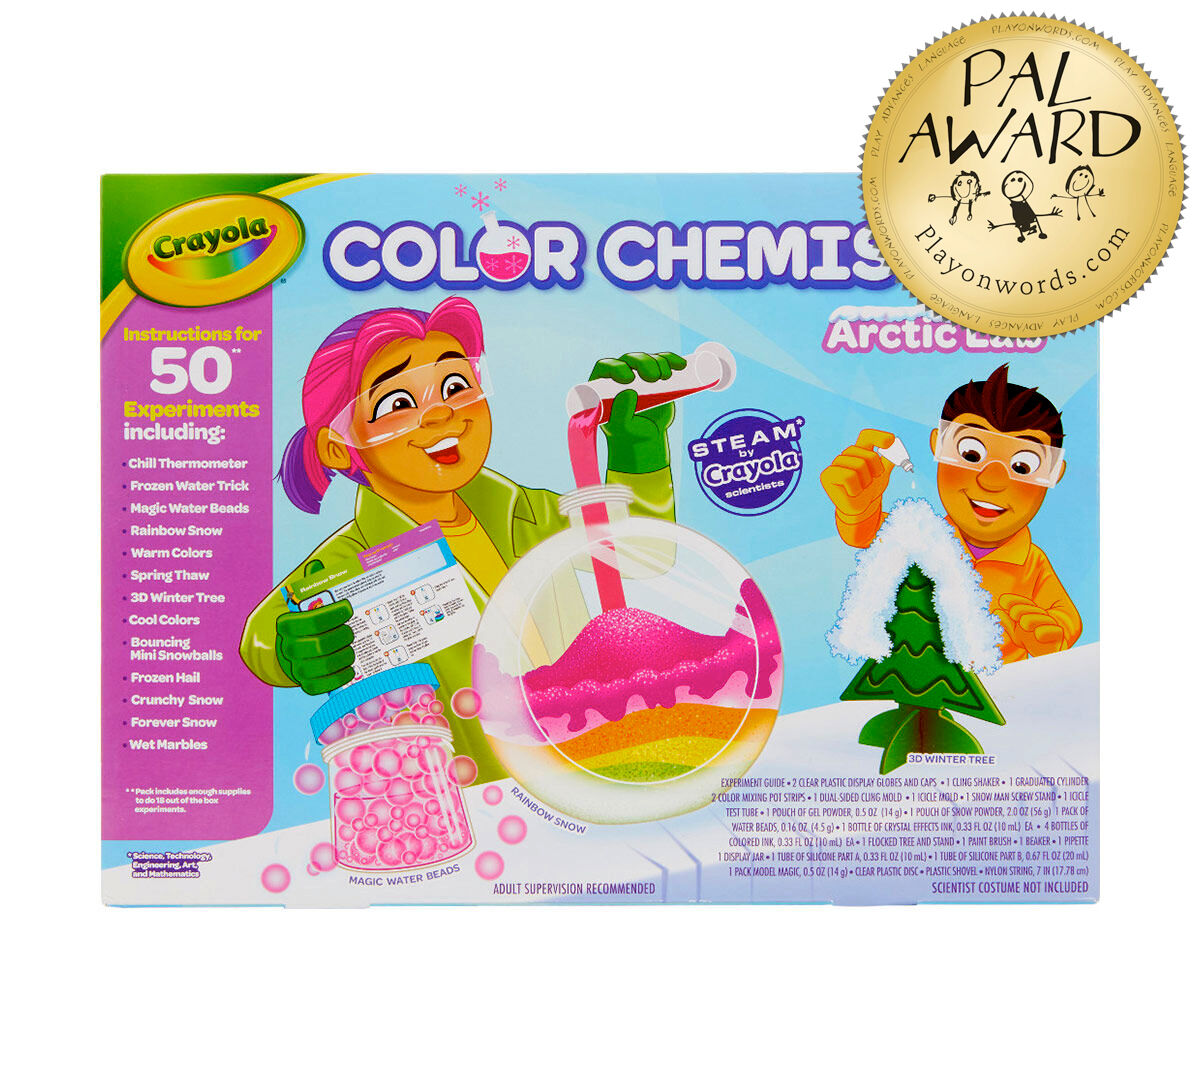 STEAM Toys for Kids, Art & Science Activities | Crayola.com | Crayola